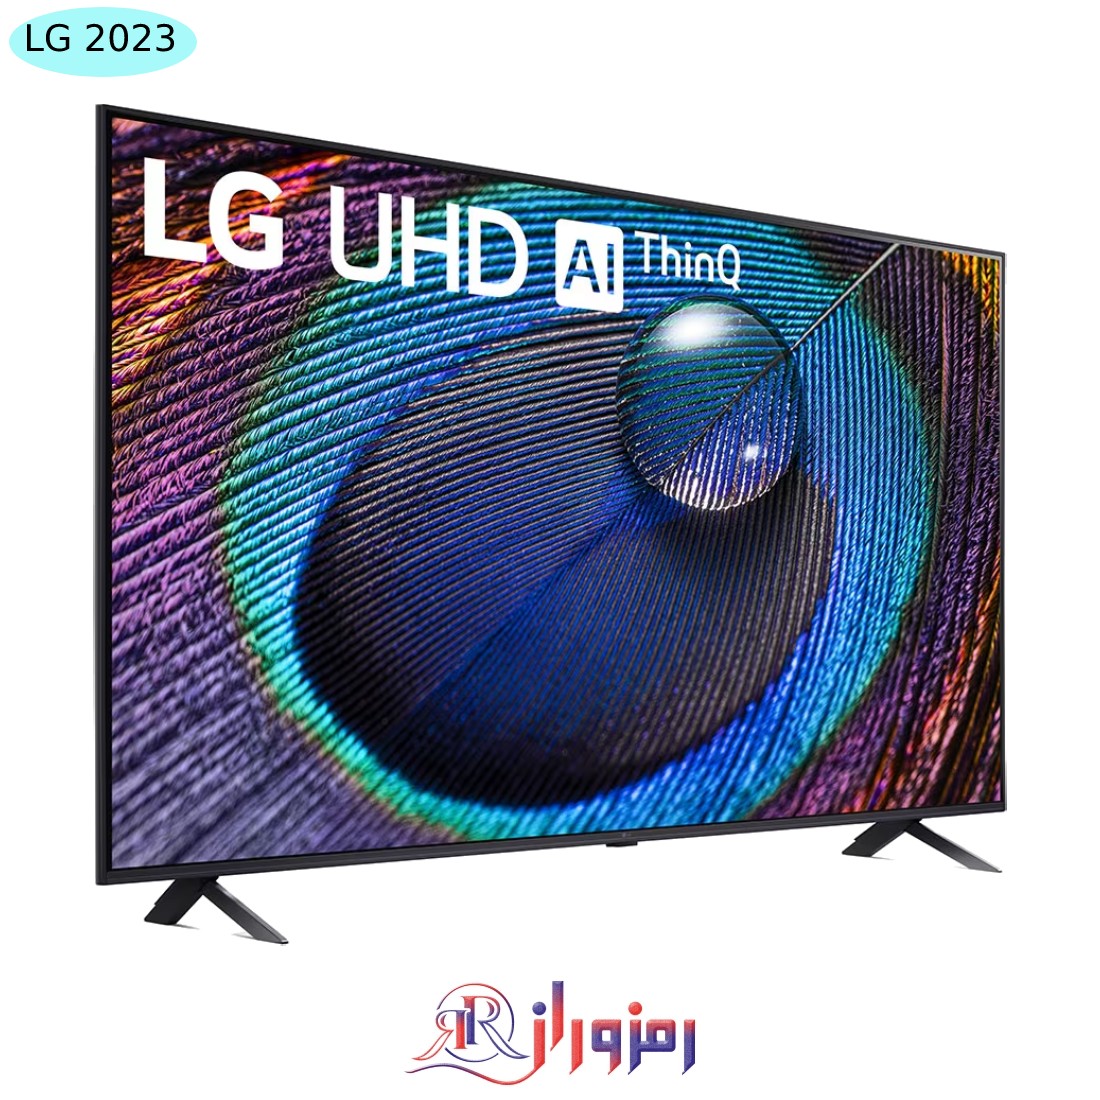 قیمت تلویزیون ال جی UR9000 سایز 43 اینچ